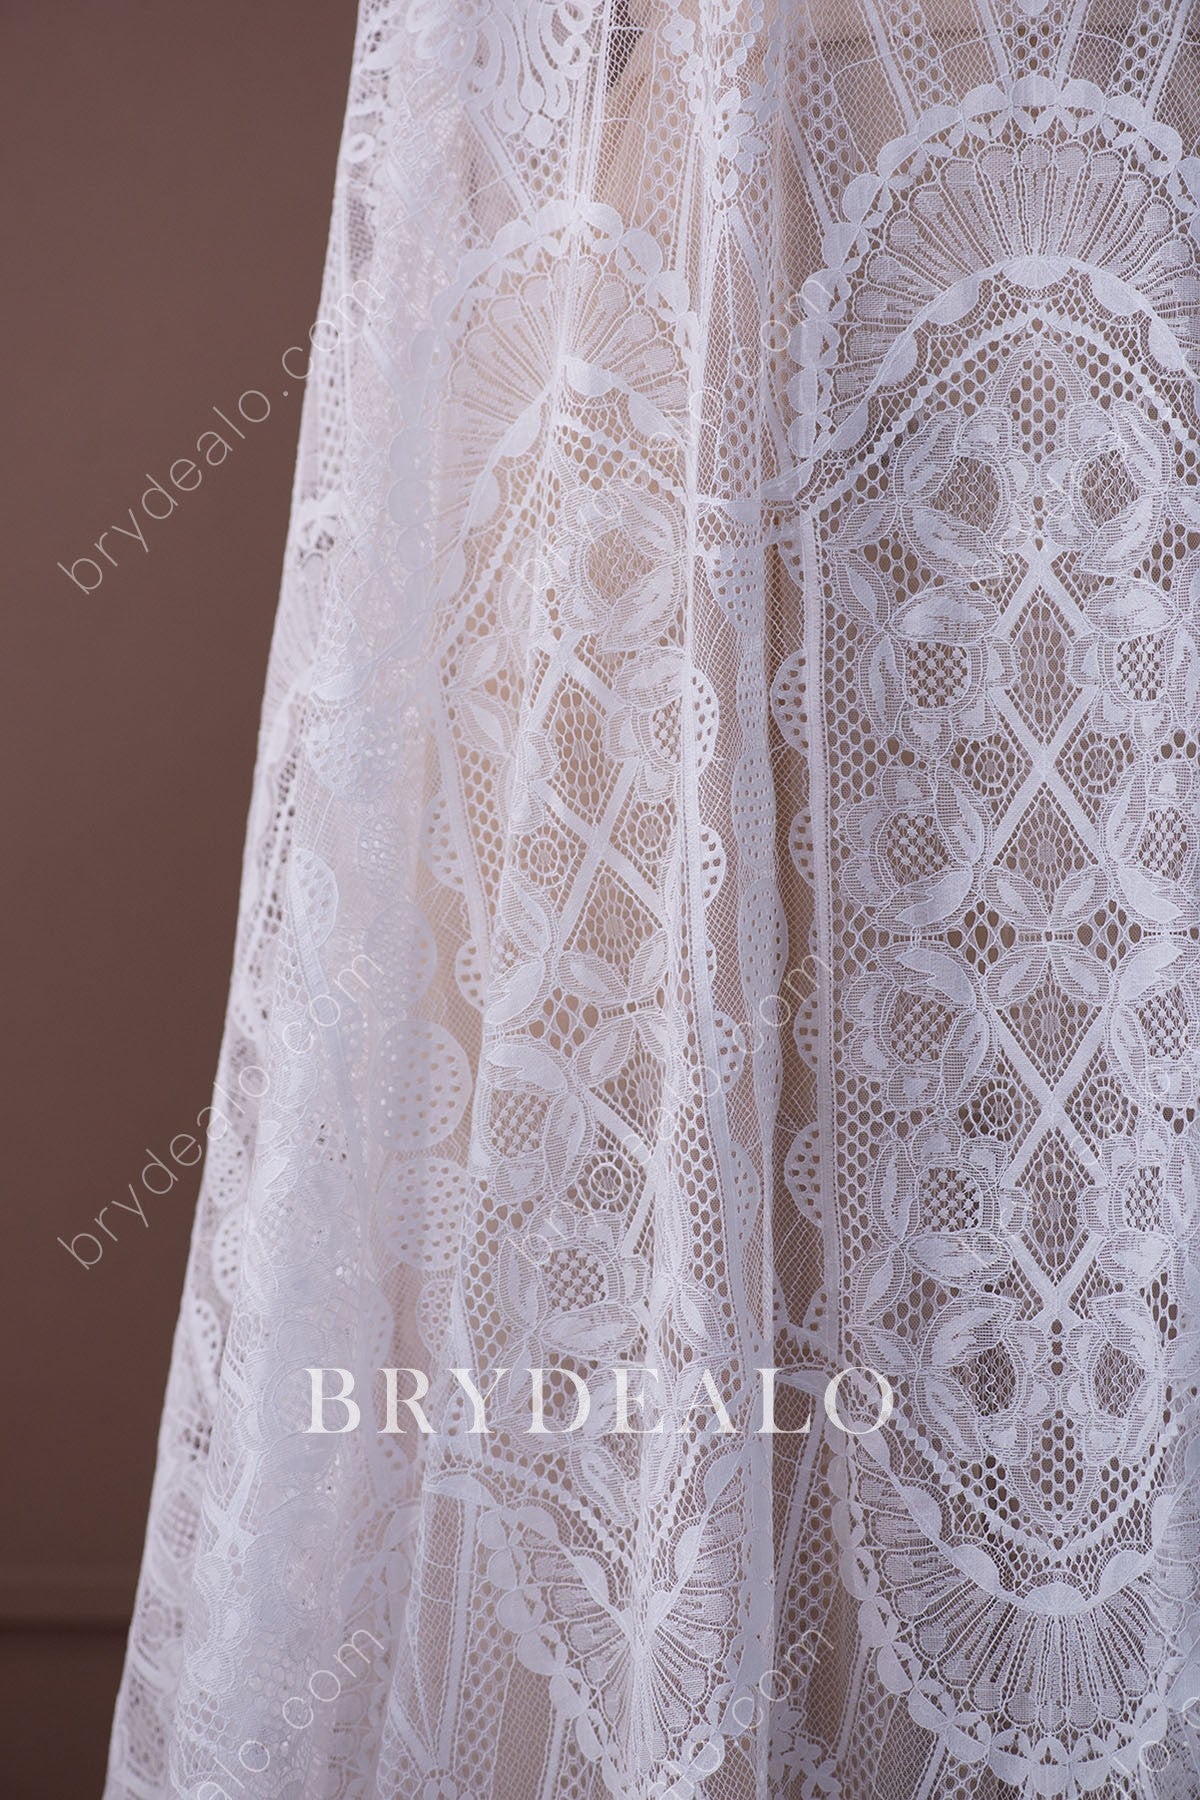  Pattern Crochet Bridal Lace Fabric Online